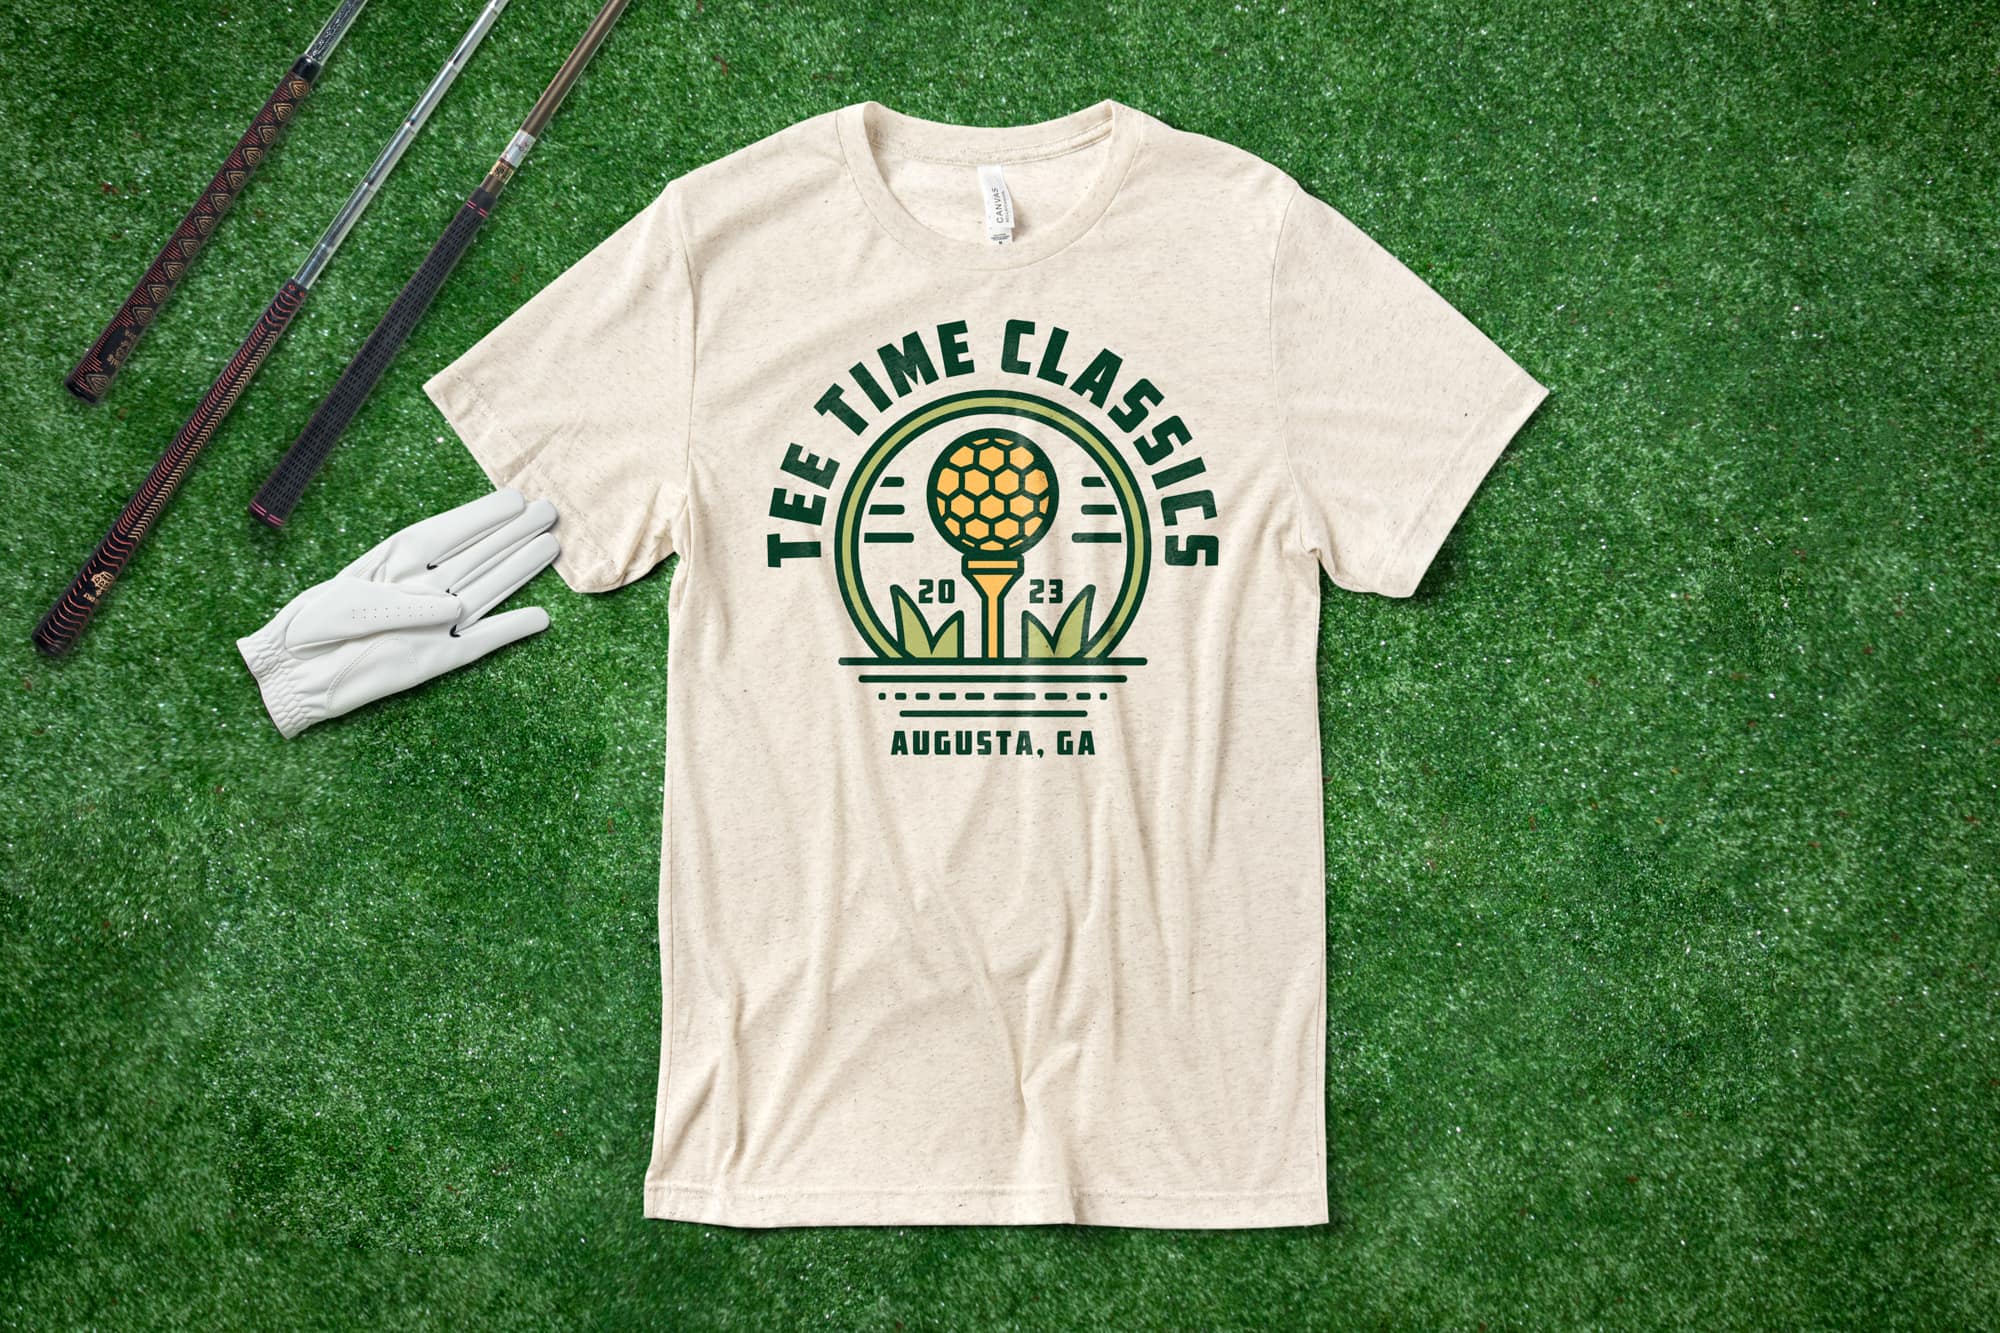 Flatlay on grass of a custom golf t-shirt with a monoline design